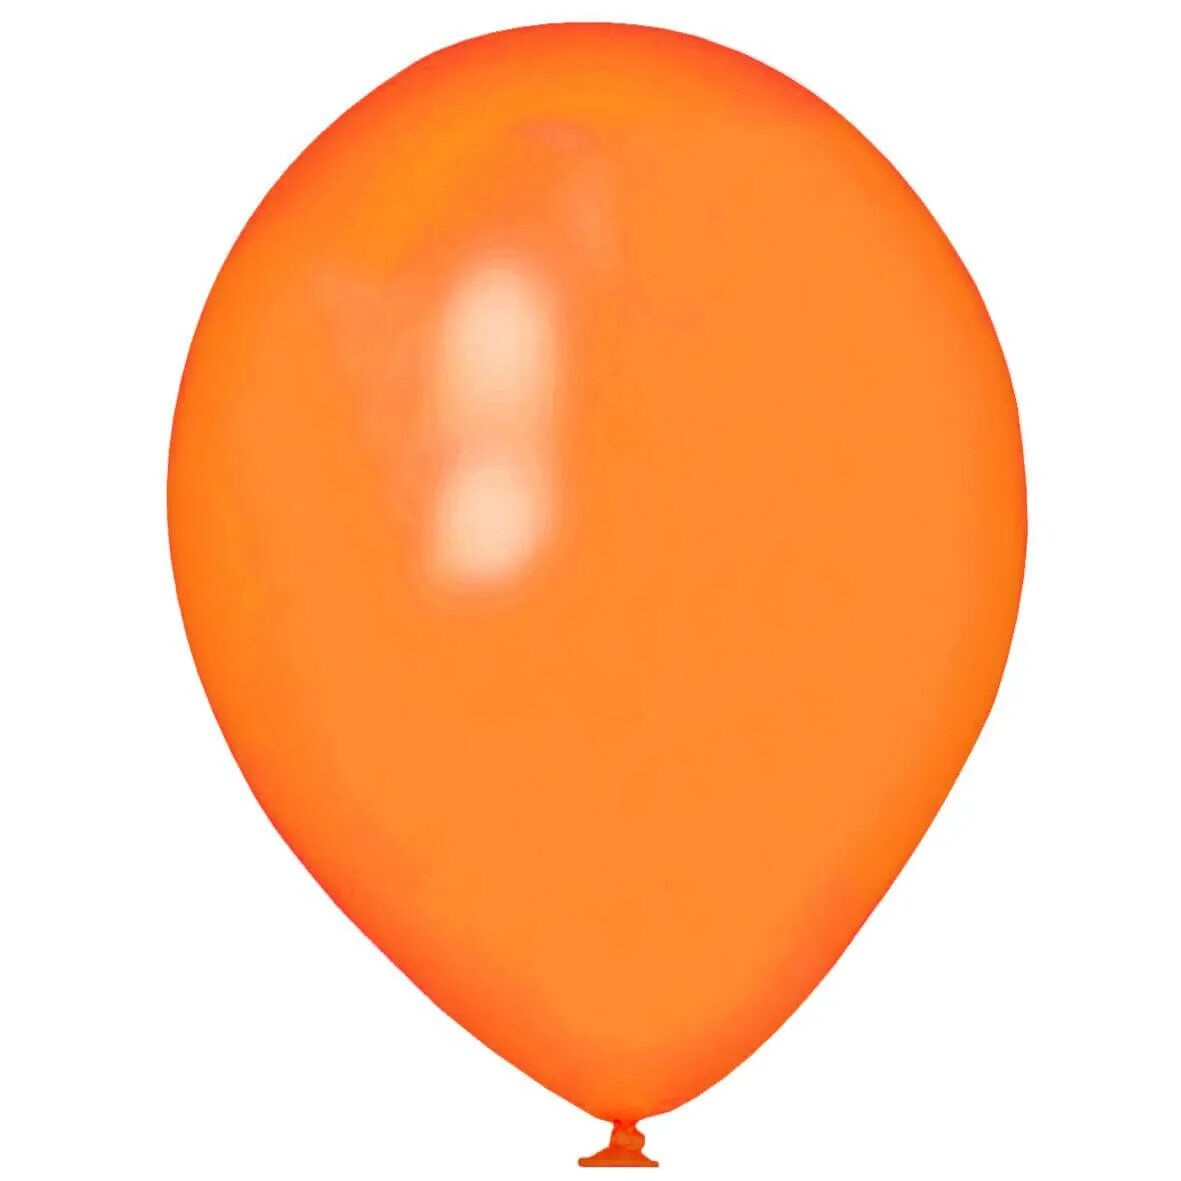 На оранжевом шаре. Воздушный шарик. Оранжевый шарик. Оранжевые воздушные шары. Воздушный шарик круглый.